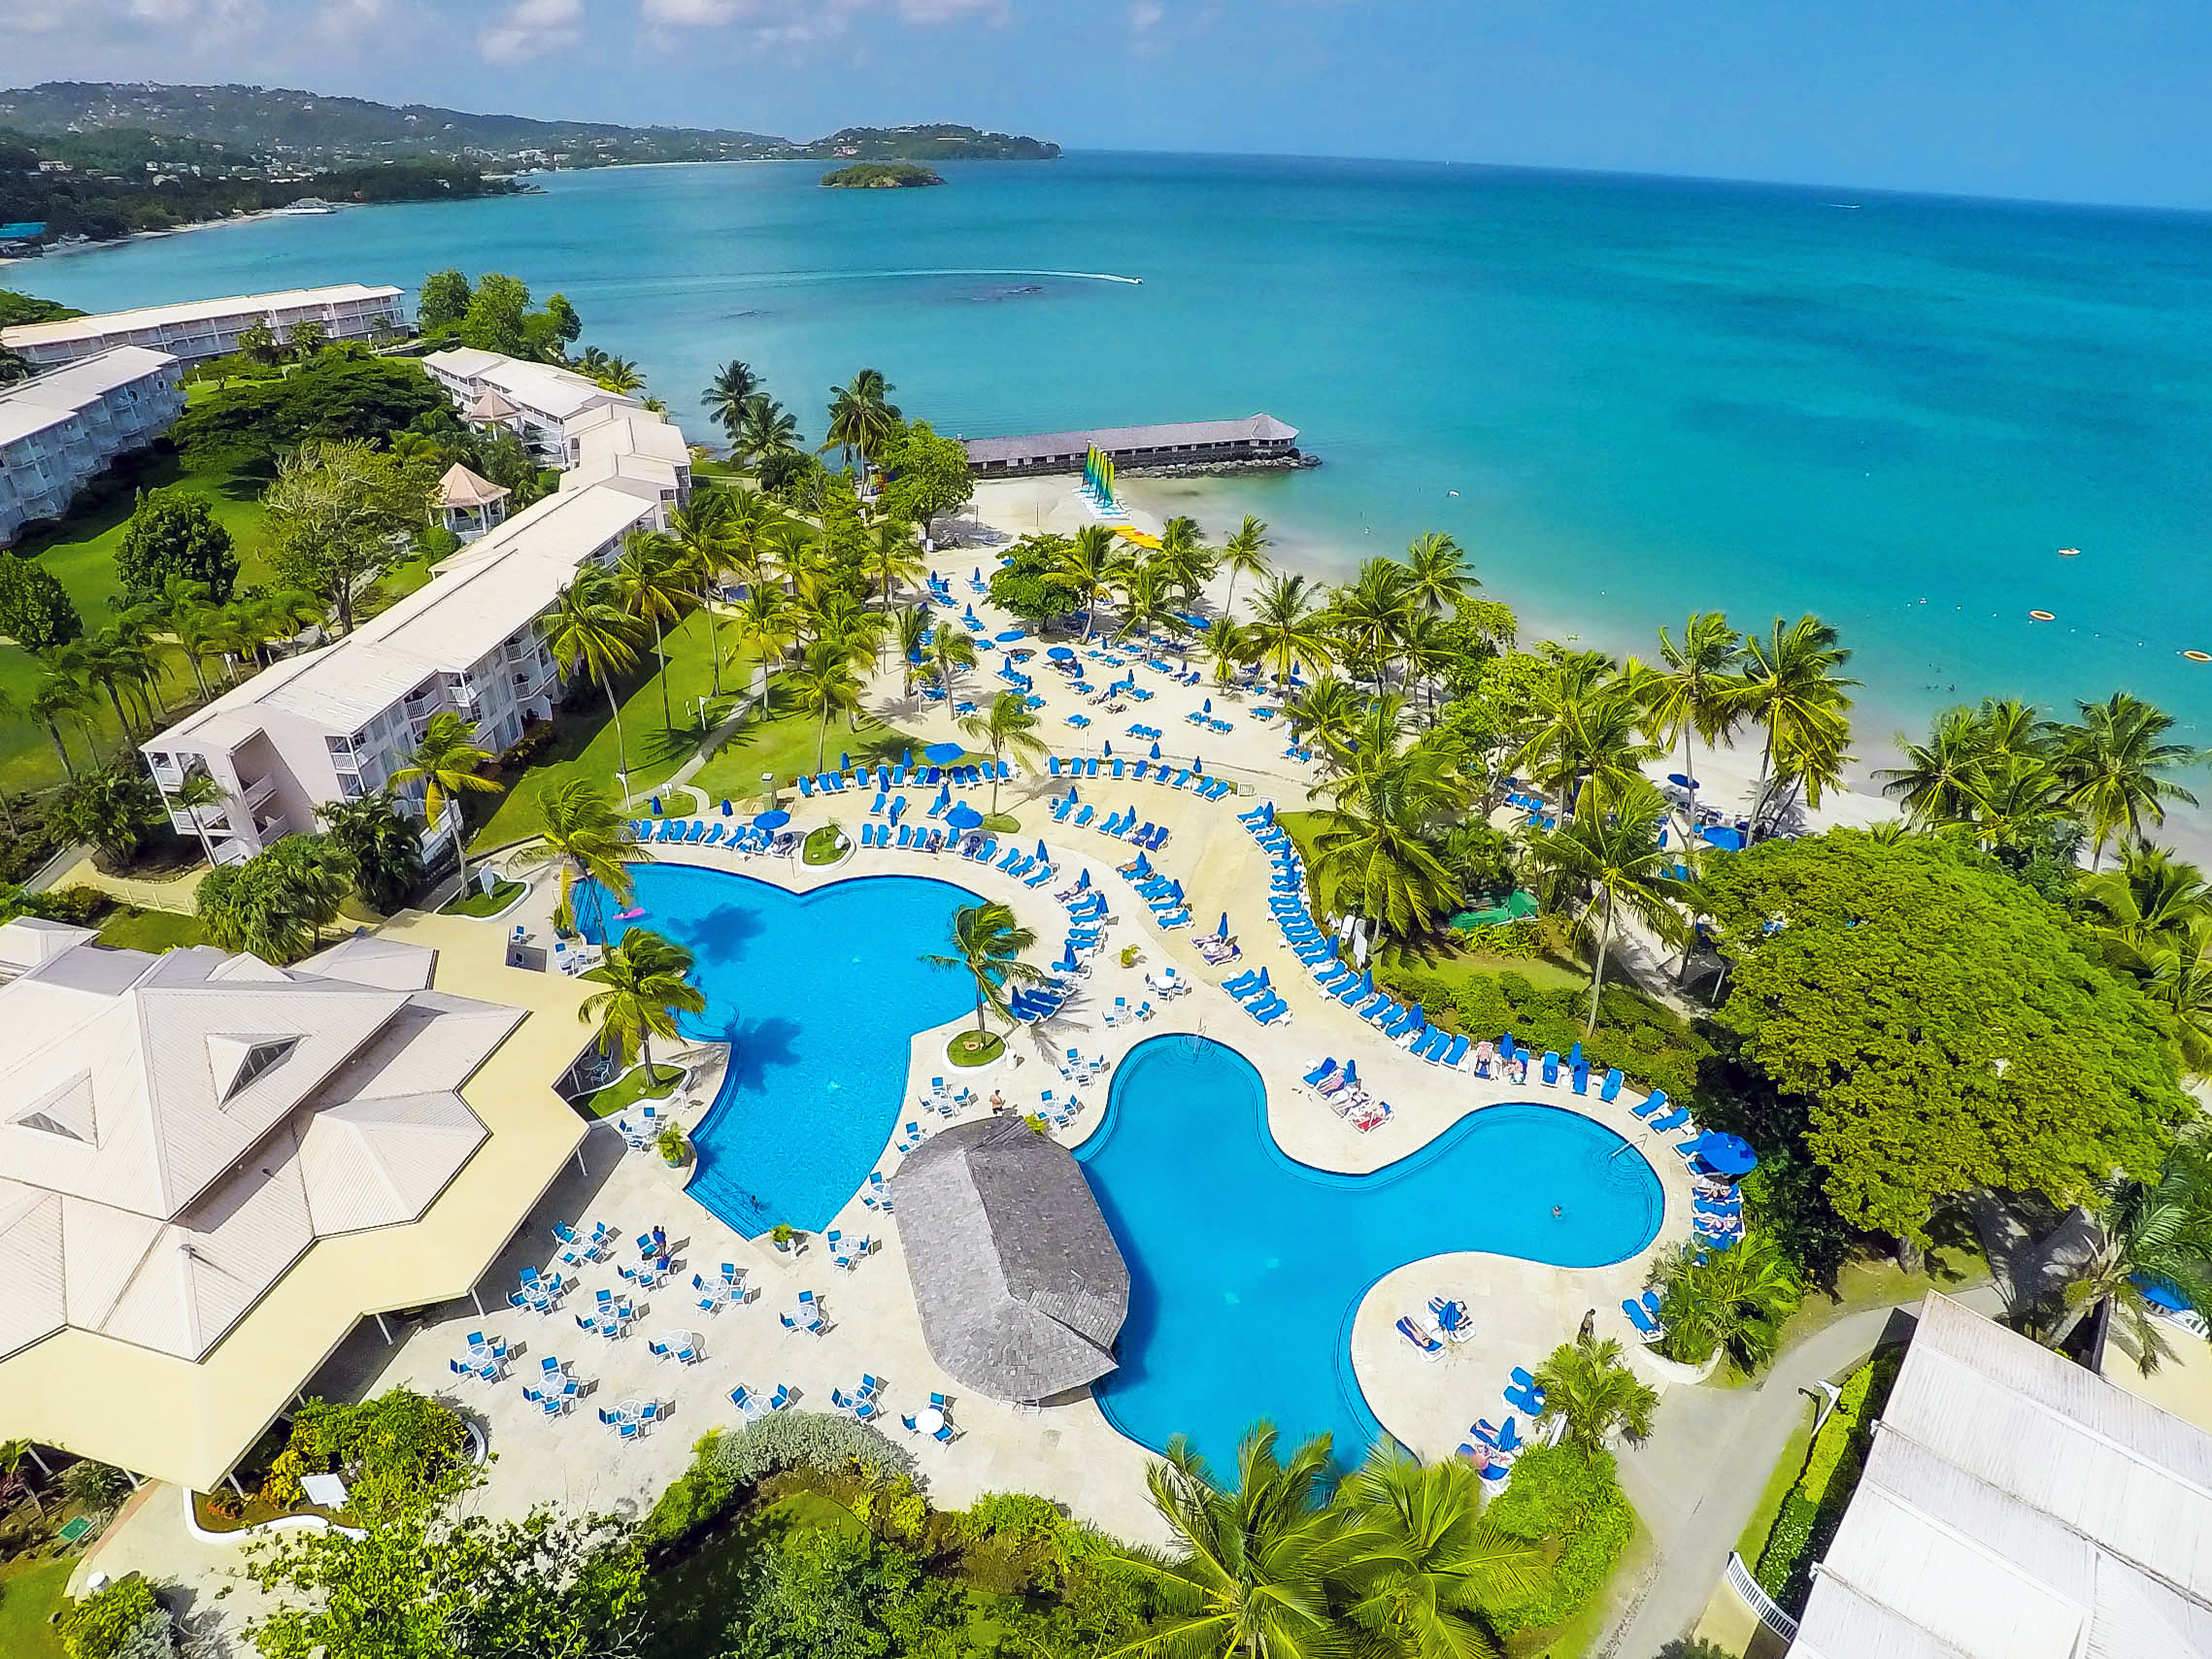 St. James's Club Morgan Bay, Saint Lucia Announces Fabulous Fall ...